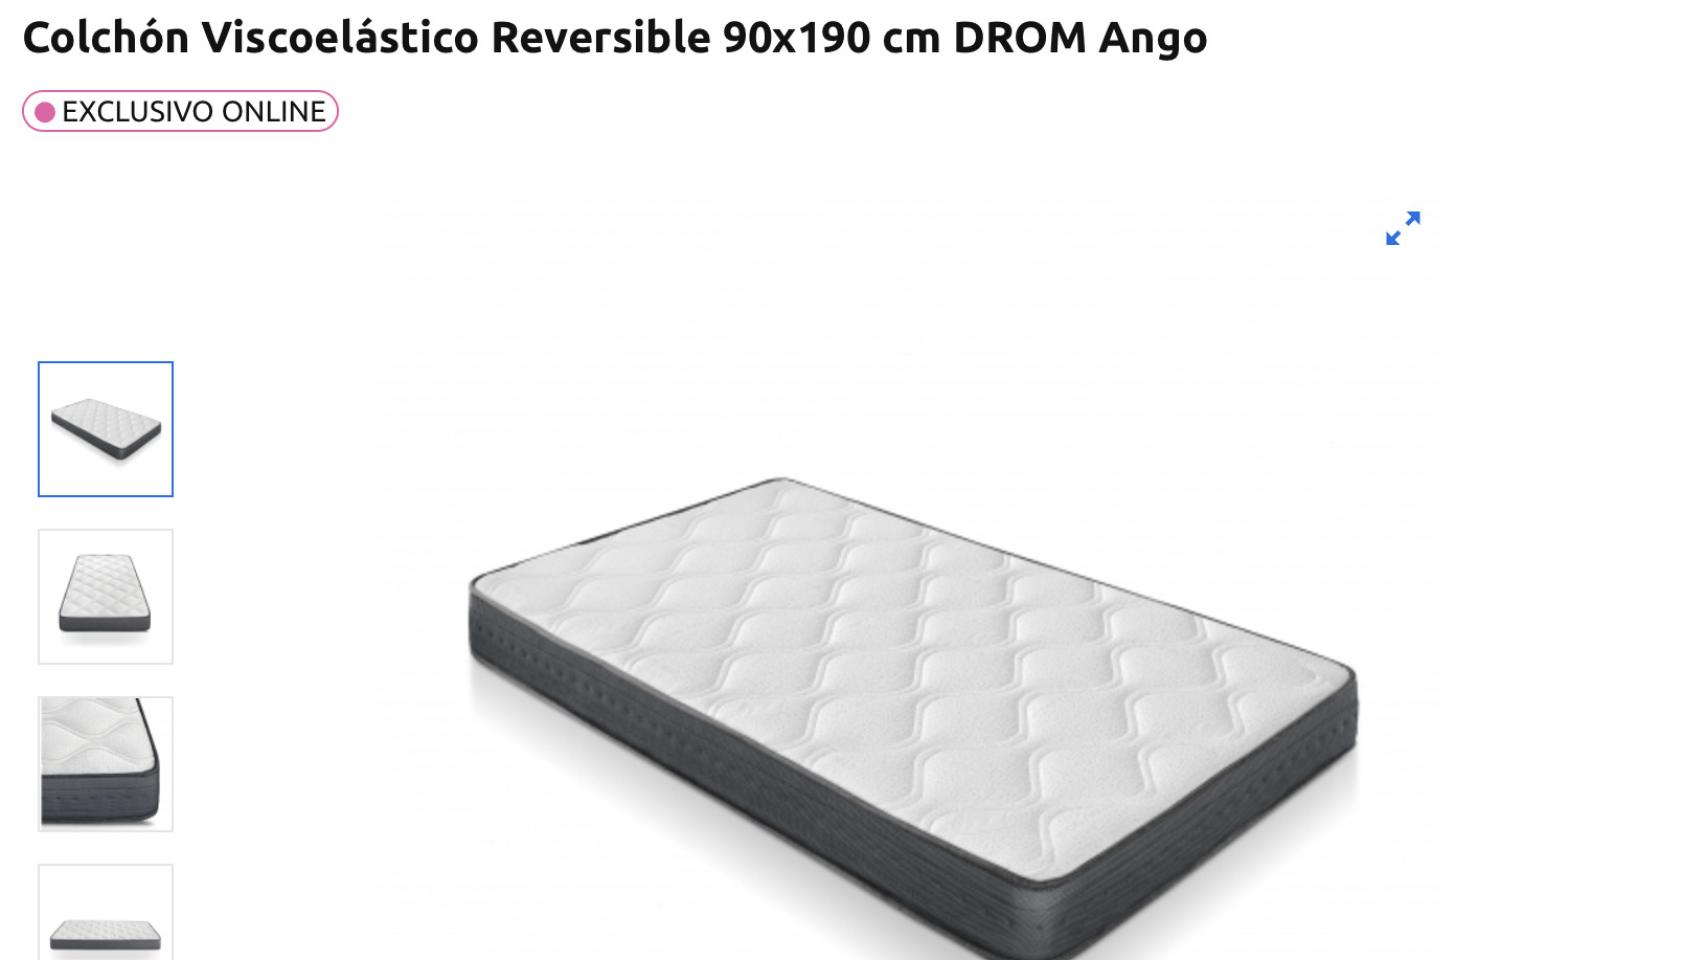 Colchón Viscoelástico Reversible 90x190 cm DROM Ango